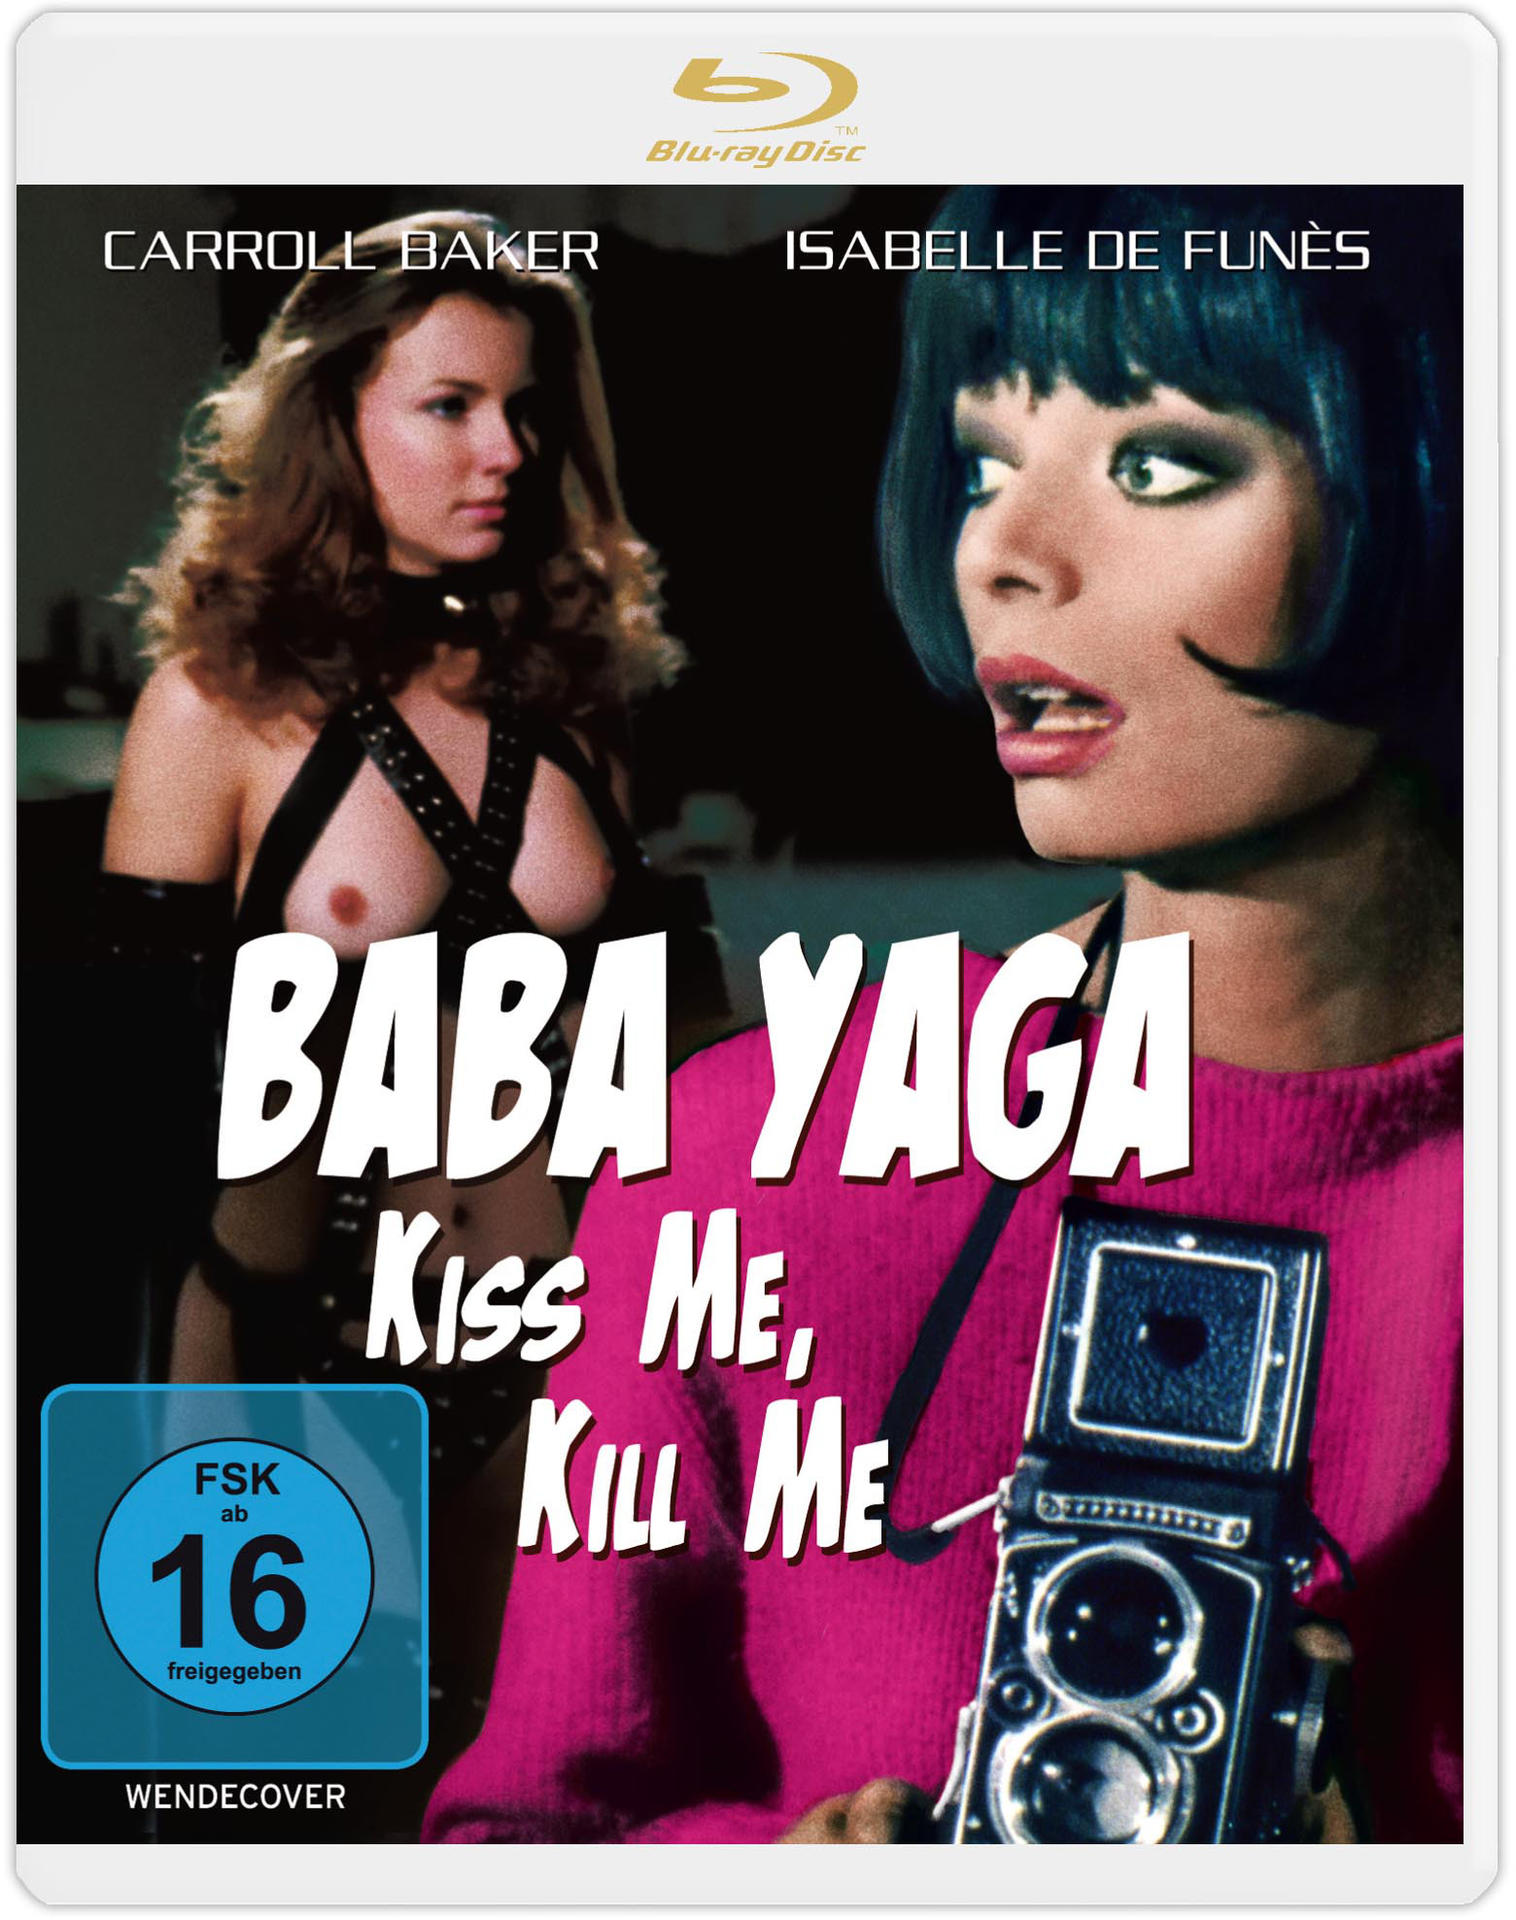 Baba Yaga - Kiss Me Kill Me, Blu-ray